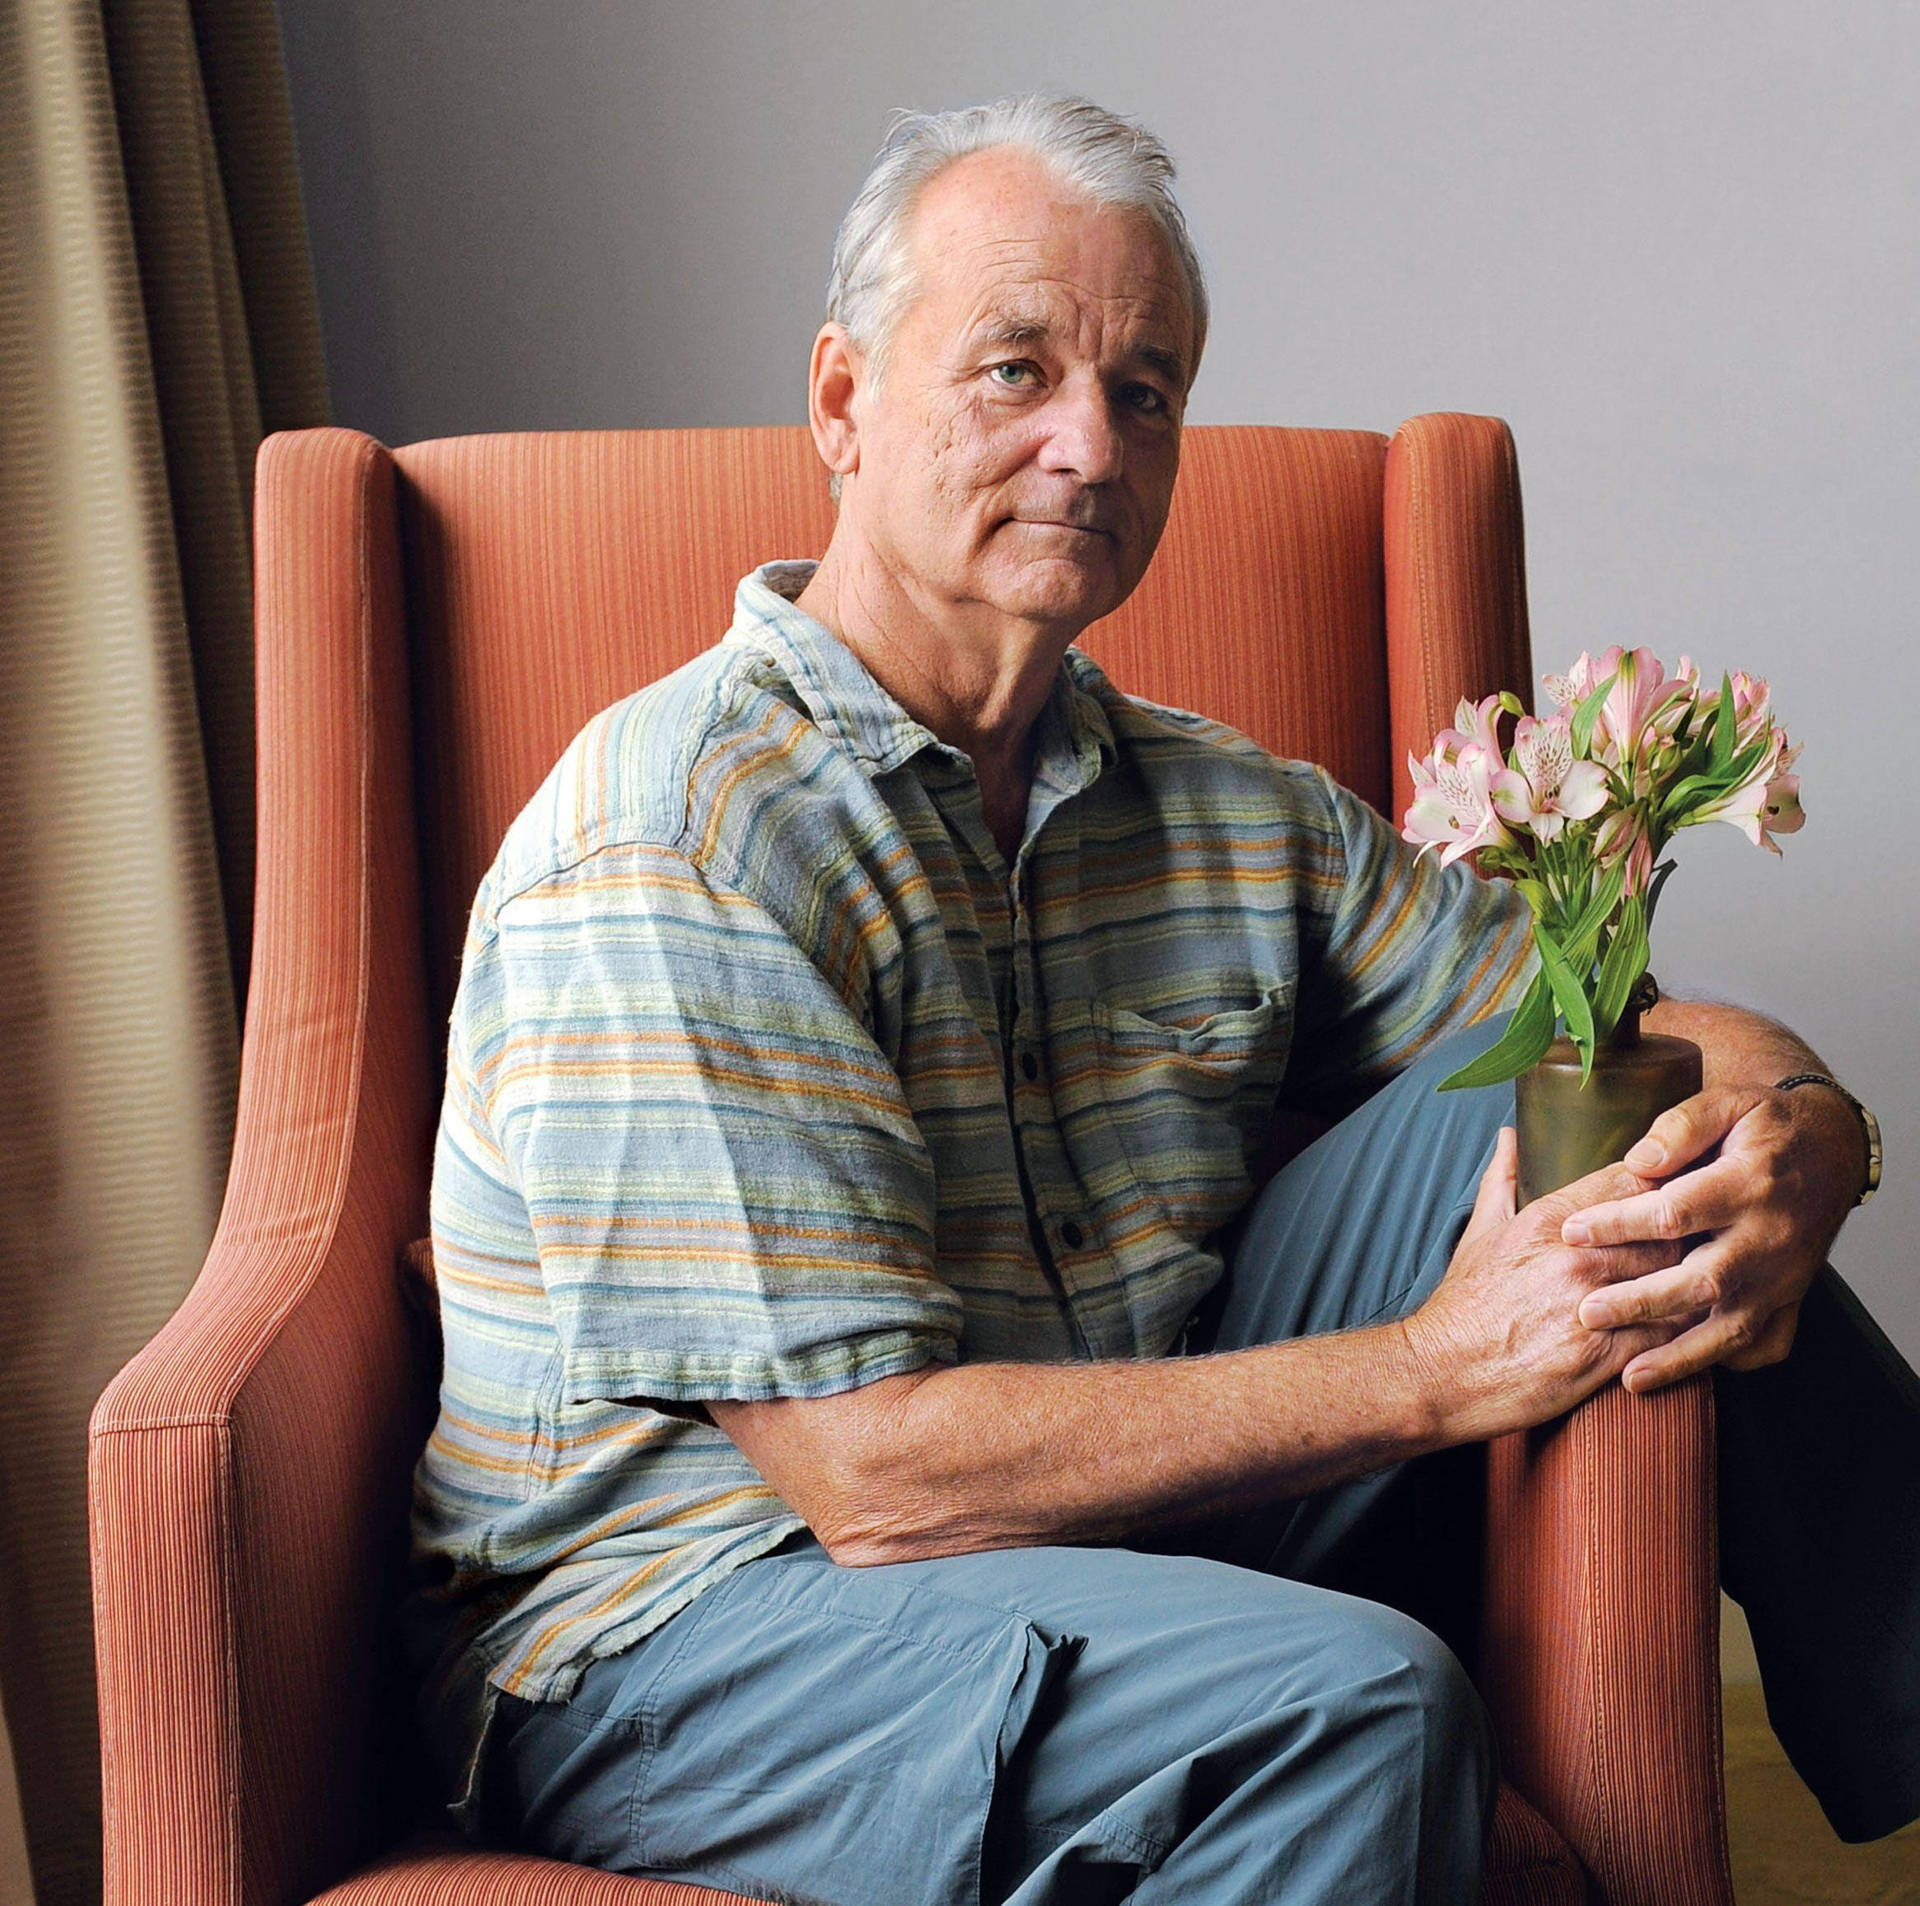 Bill Murray Sitting Chair Flowers Hotel Wallpaper